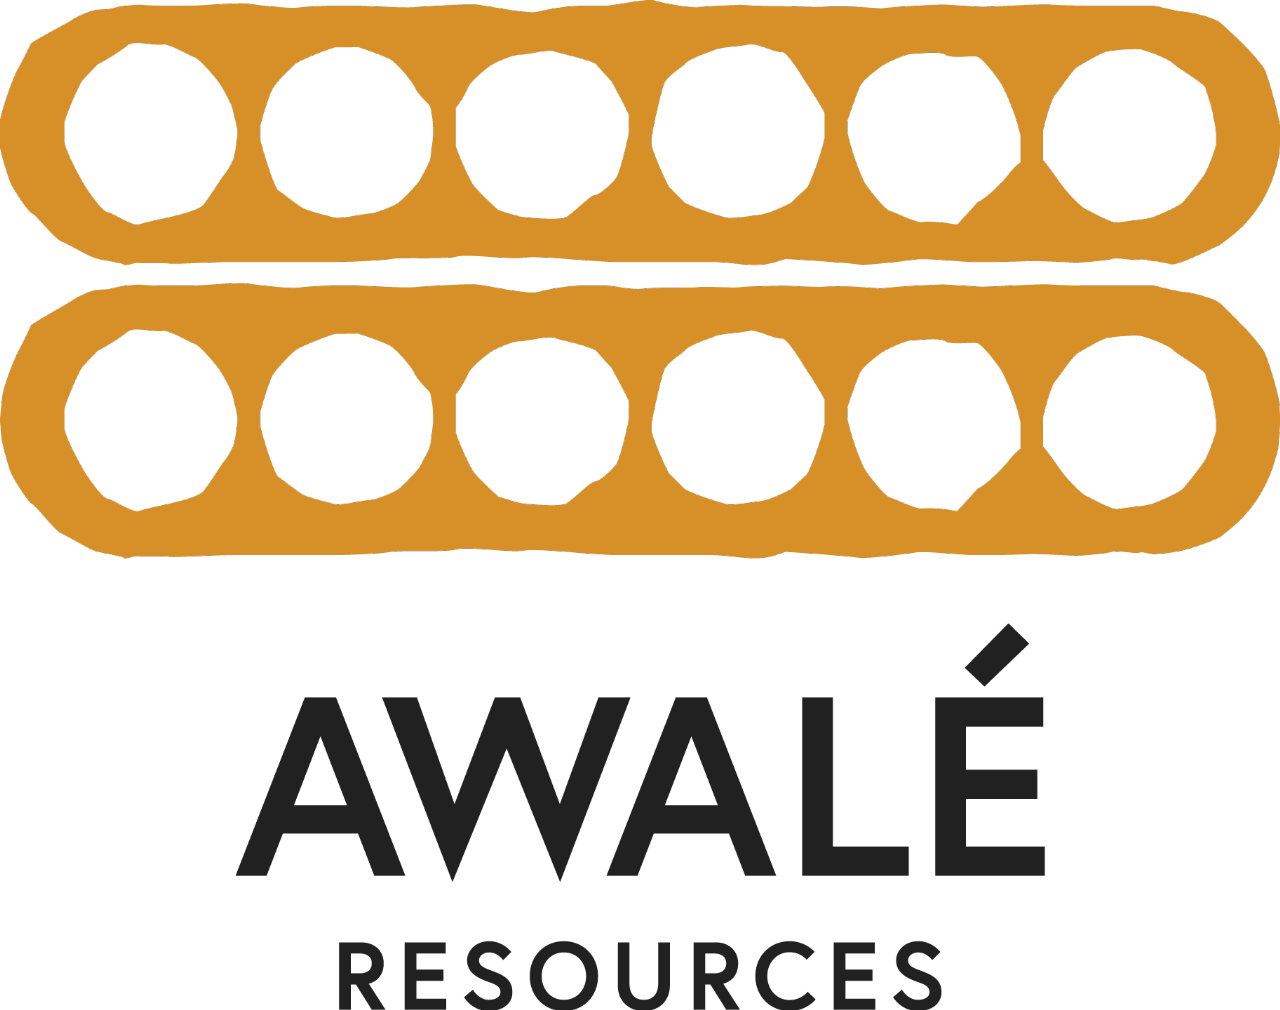 Awale Resources Limted logo